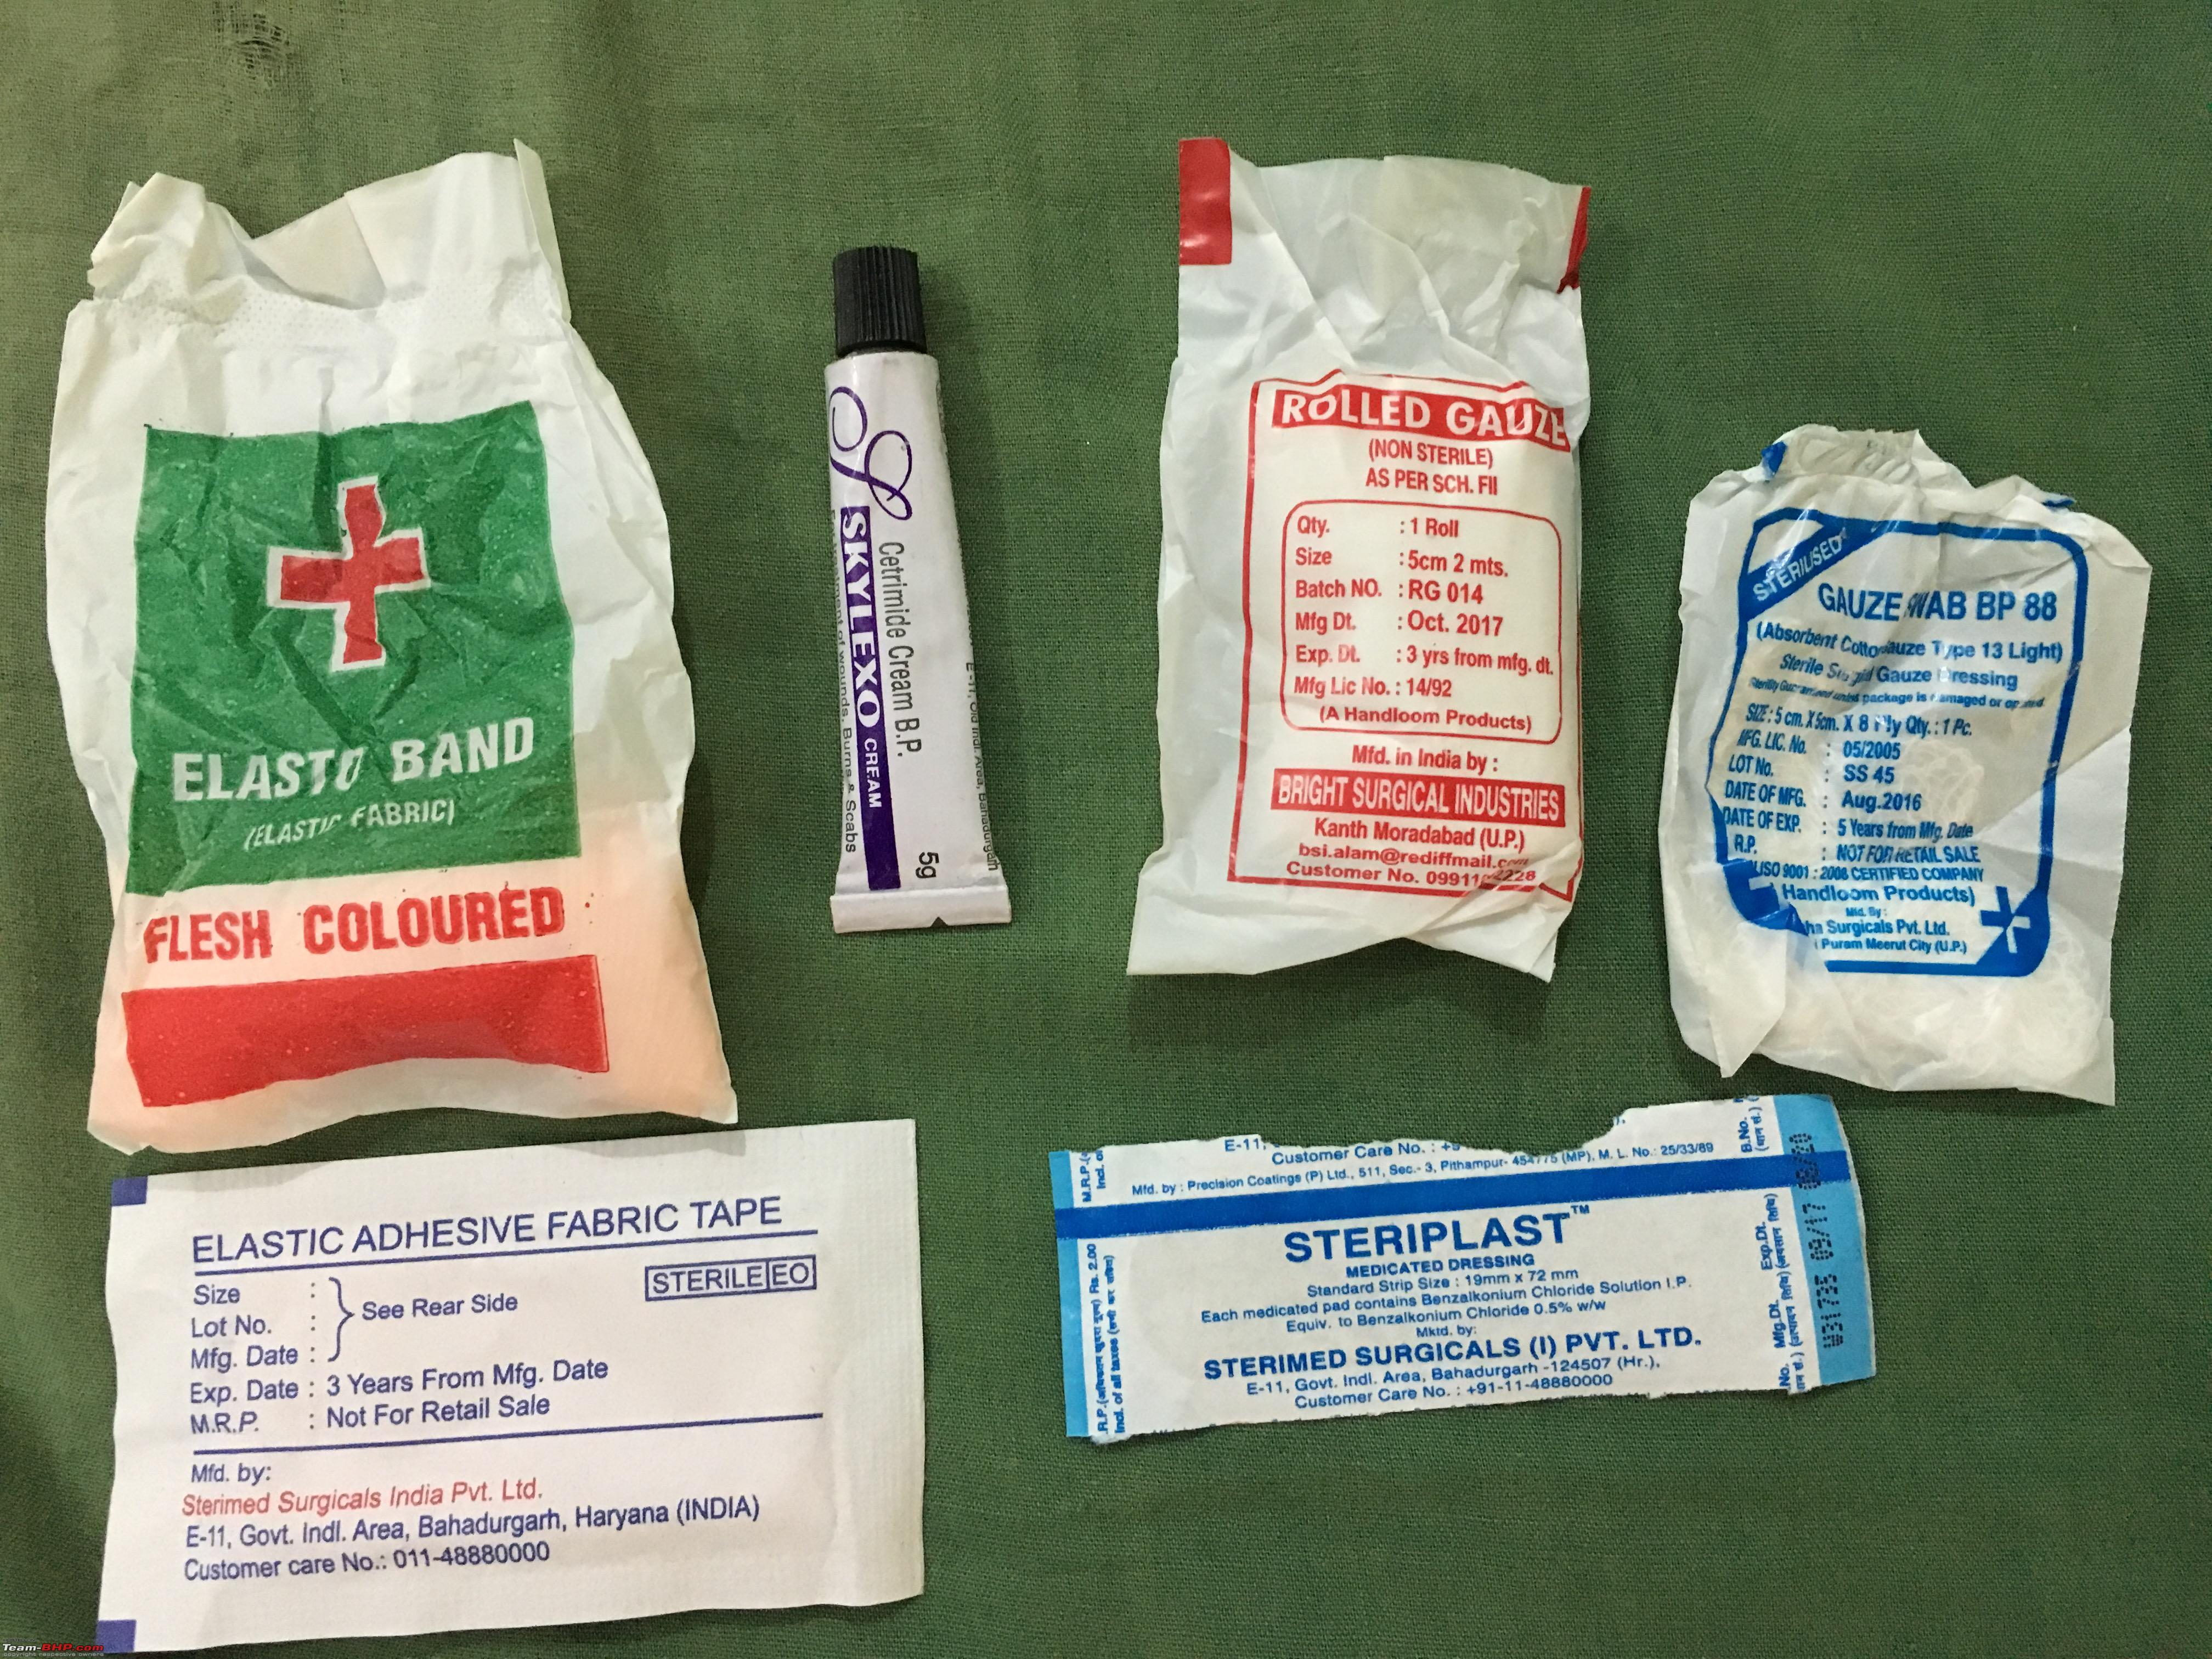 First Aid supplies, medicines & procedures for motorists - Team-BHP